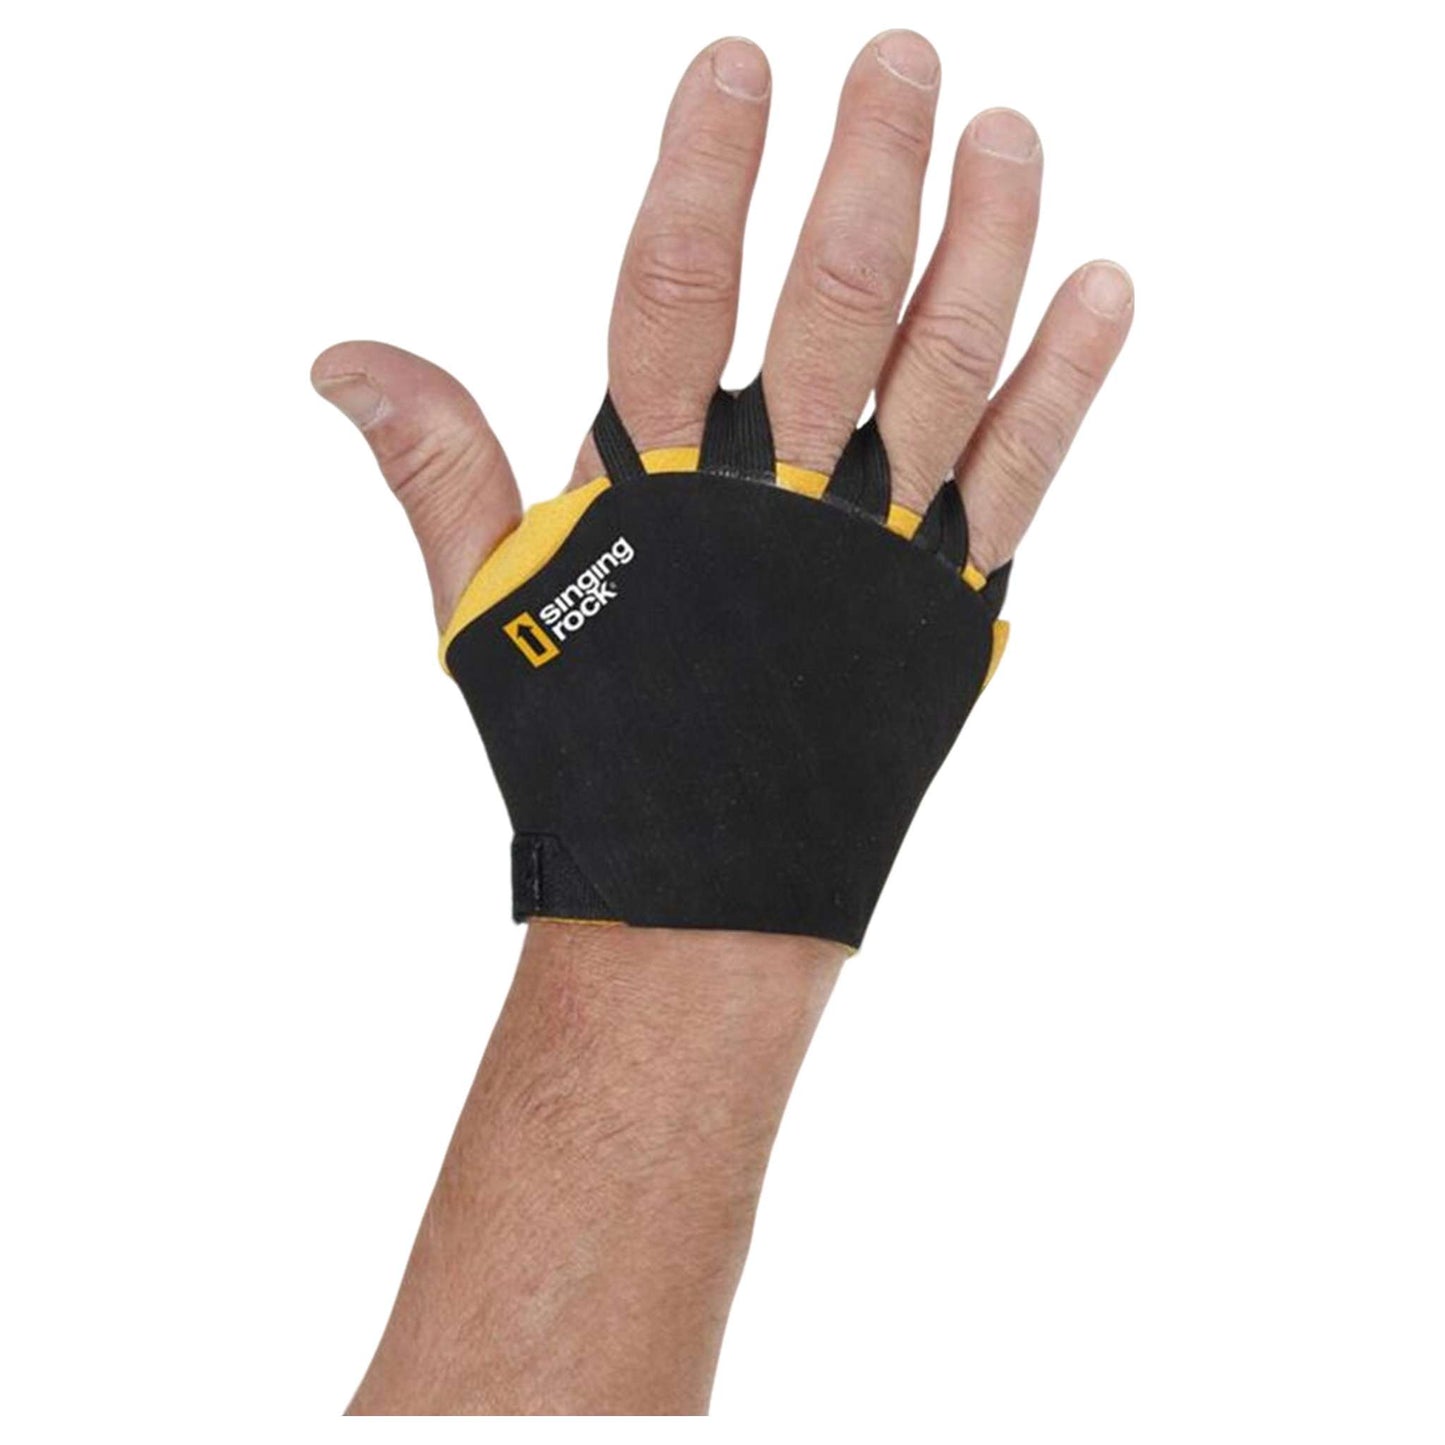 Craggy - Premium Crack Climbing Gloves | Enhanced Grip & Durability